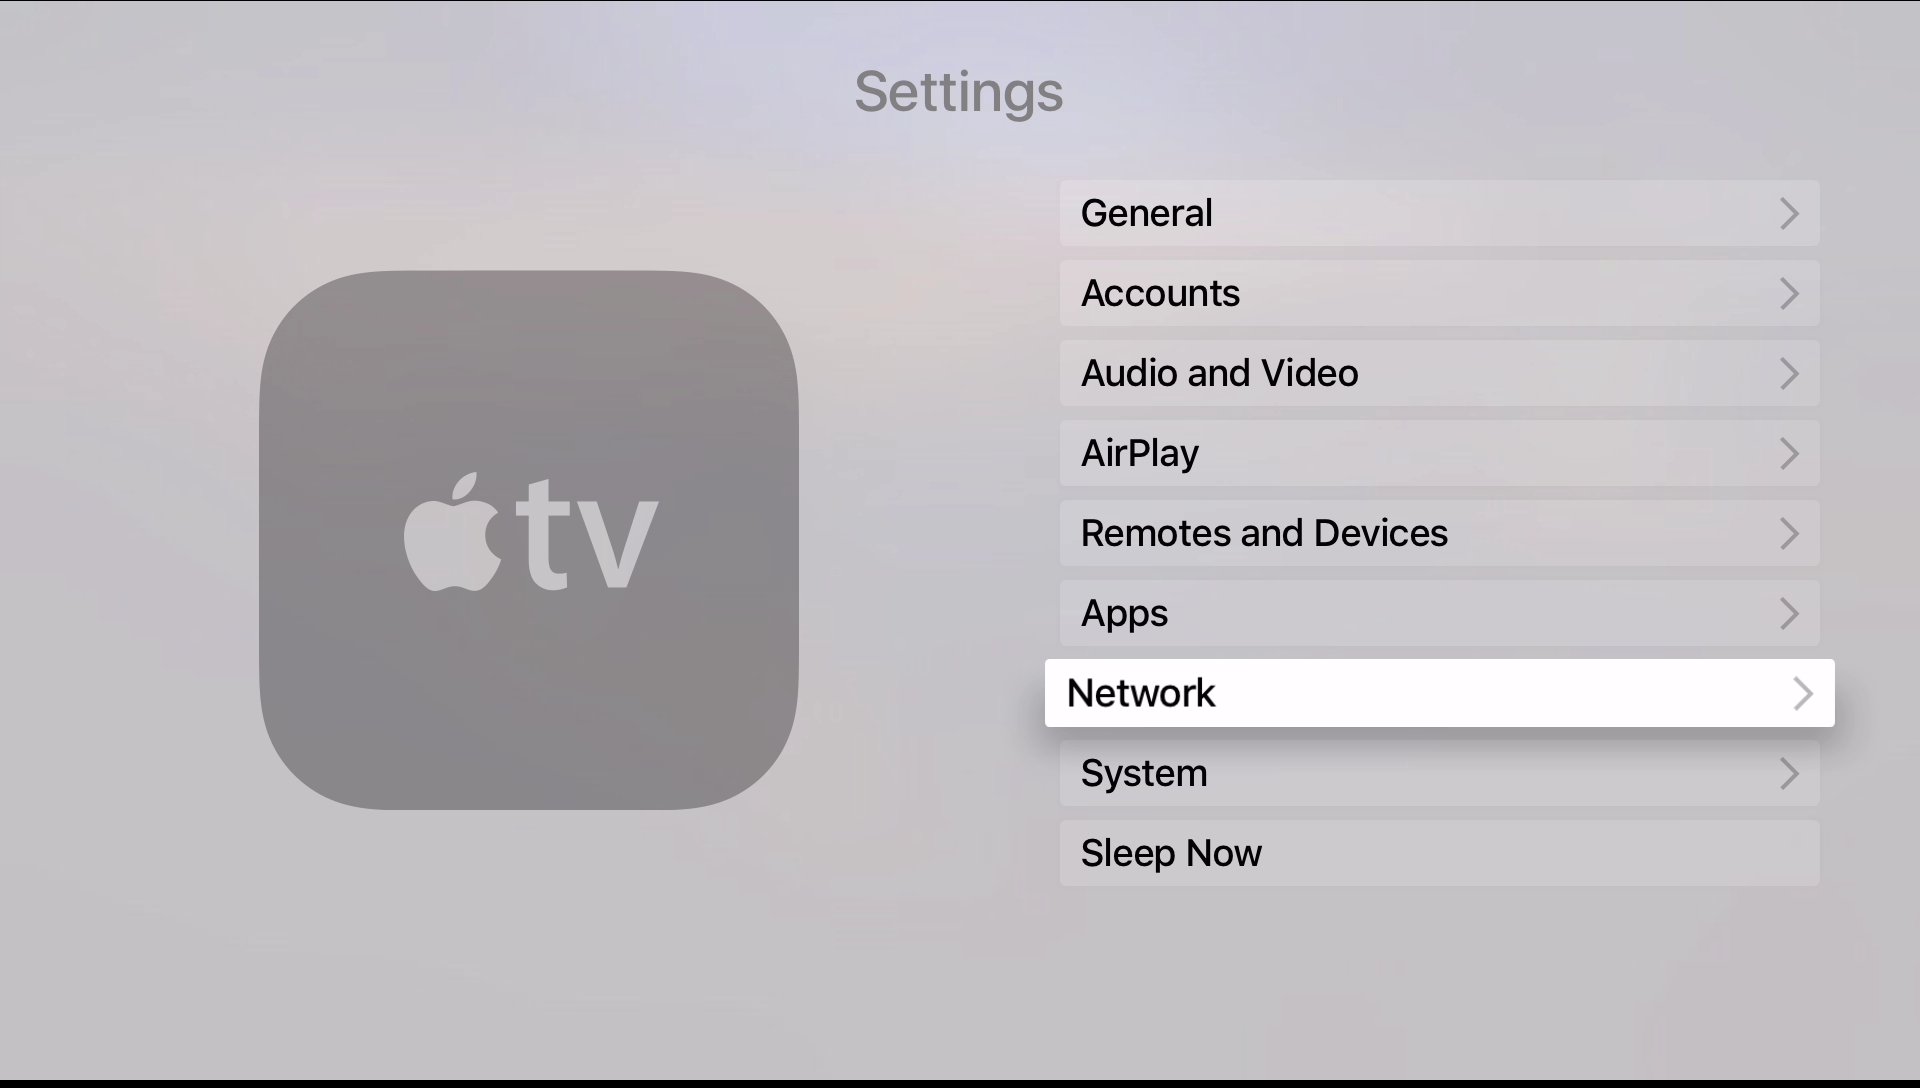 Select Network from Settings menu in apple tv 4